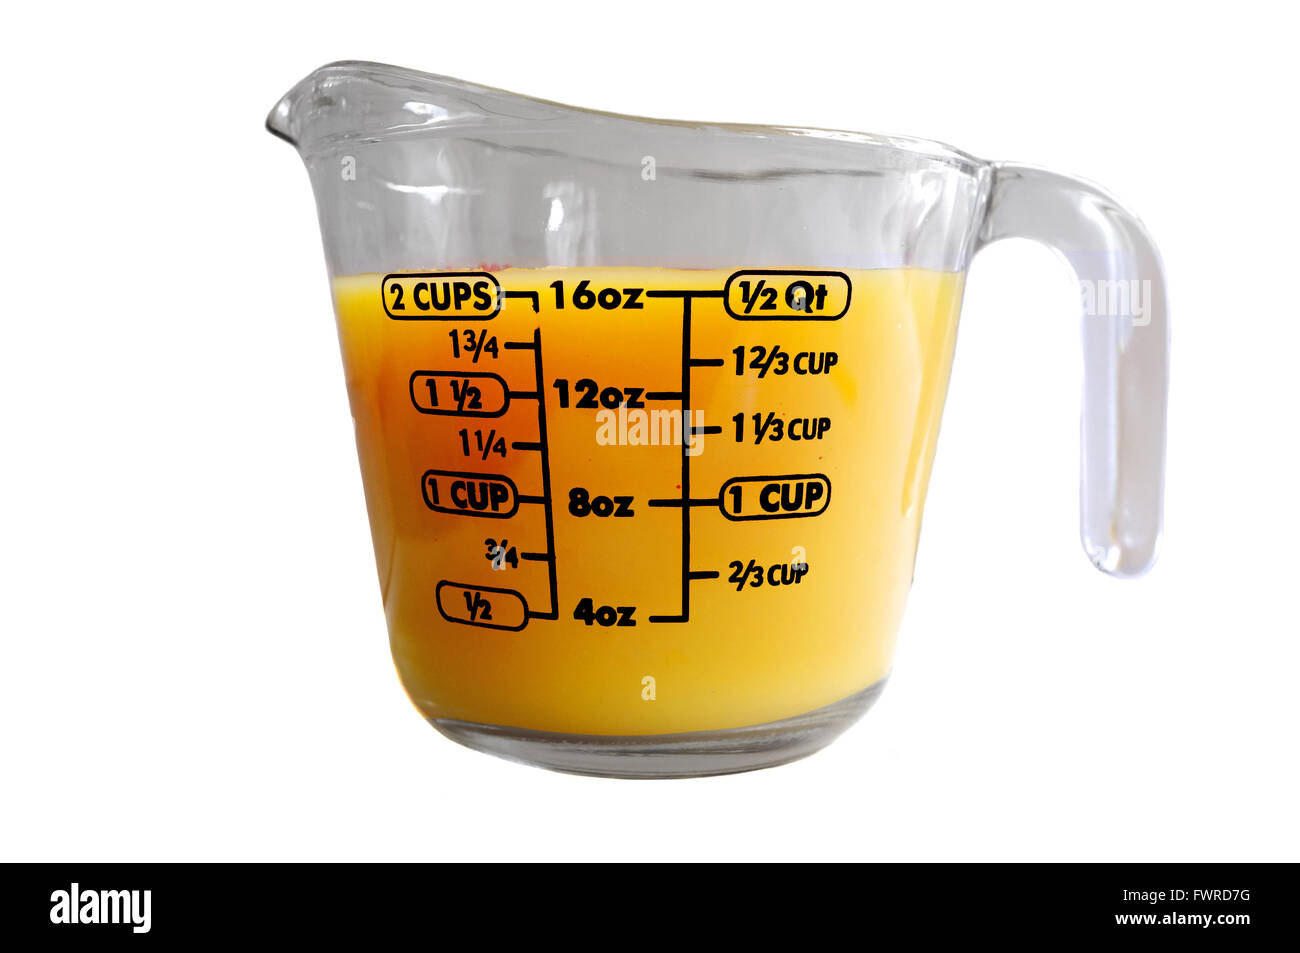 https://c8.alamy.com/comp/FWRD7G/yellow-coloured-liquid-in-a-pyrex-measuring-jug-photographed-against-FWRD7G.jpg